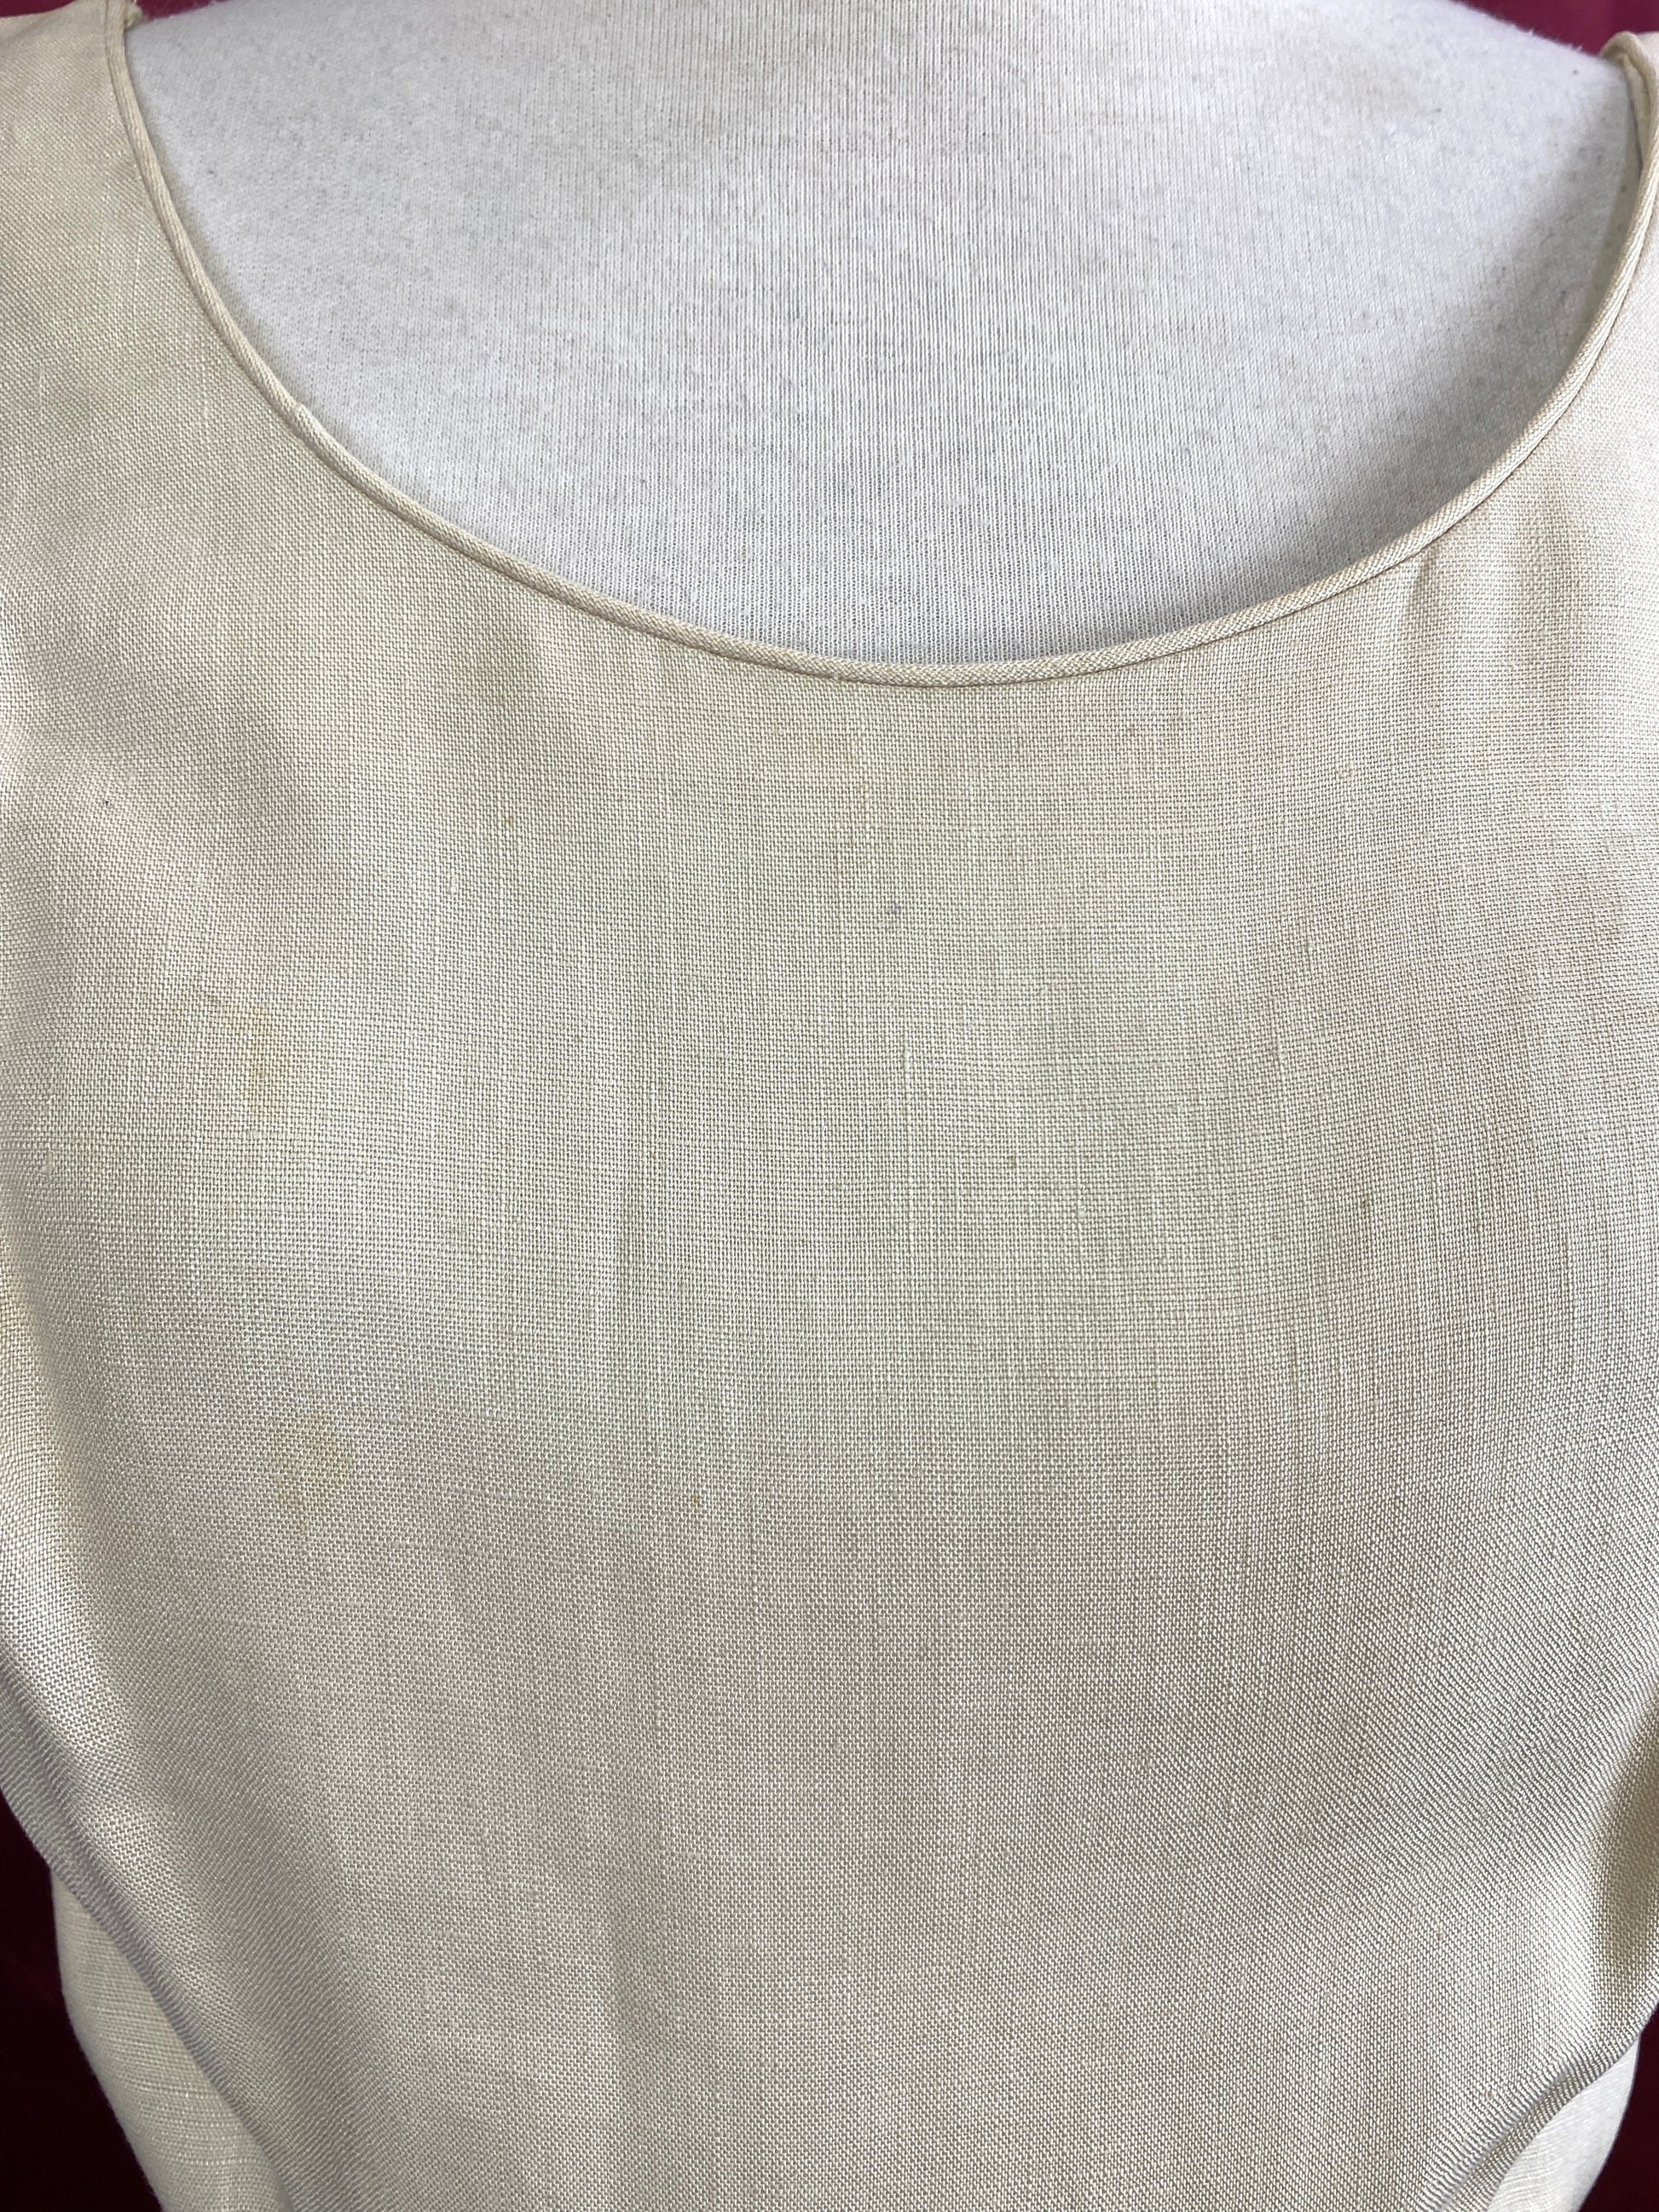 Vintage 1950s Ivory Embroidered Short-Sleeve Linen Sheath Dress, XS